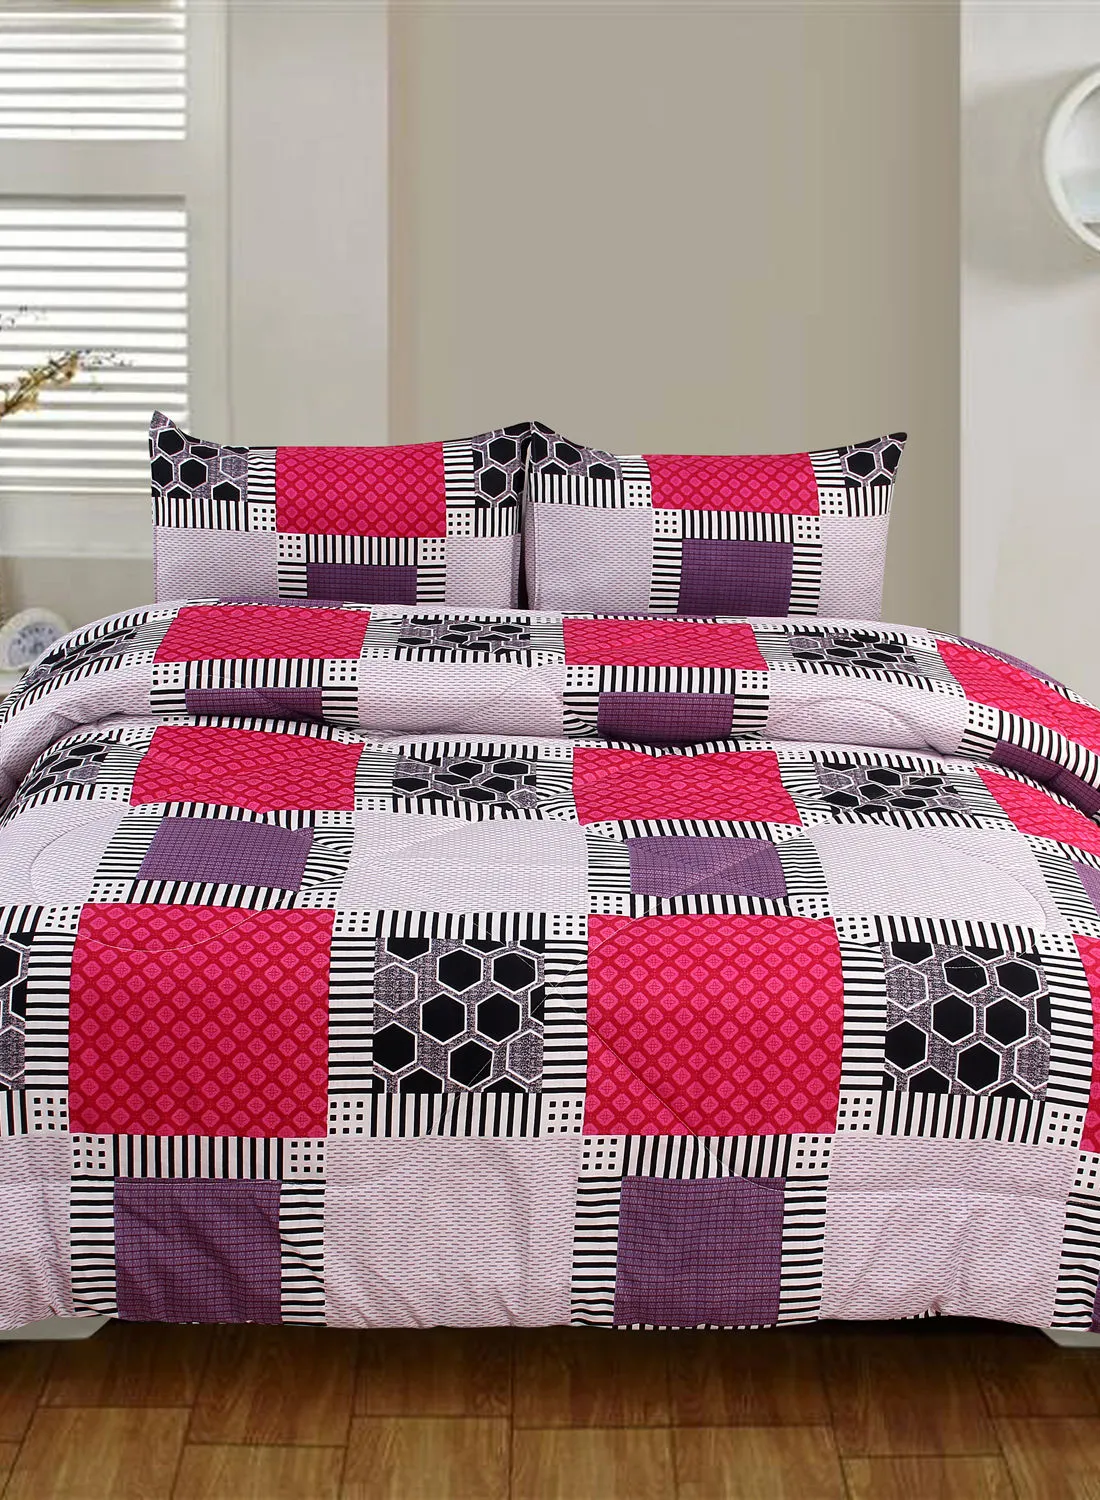 Hometown Comforter Set - Hometown Bed Linen With Pillow Cover 50X70Cm, Comforter 160X220Cm - For Queen Size Mattress